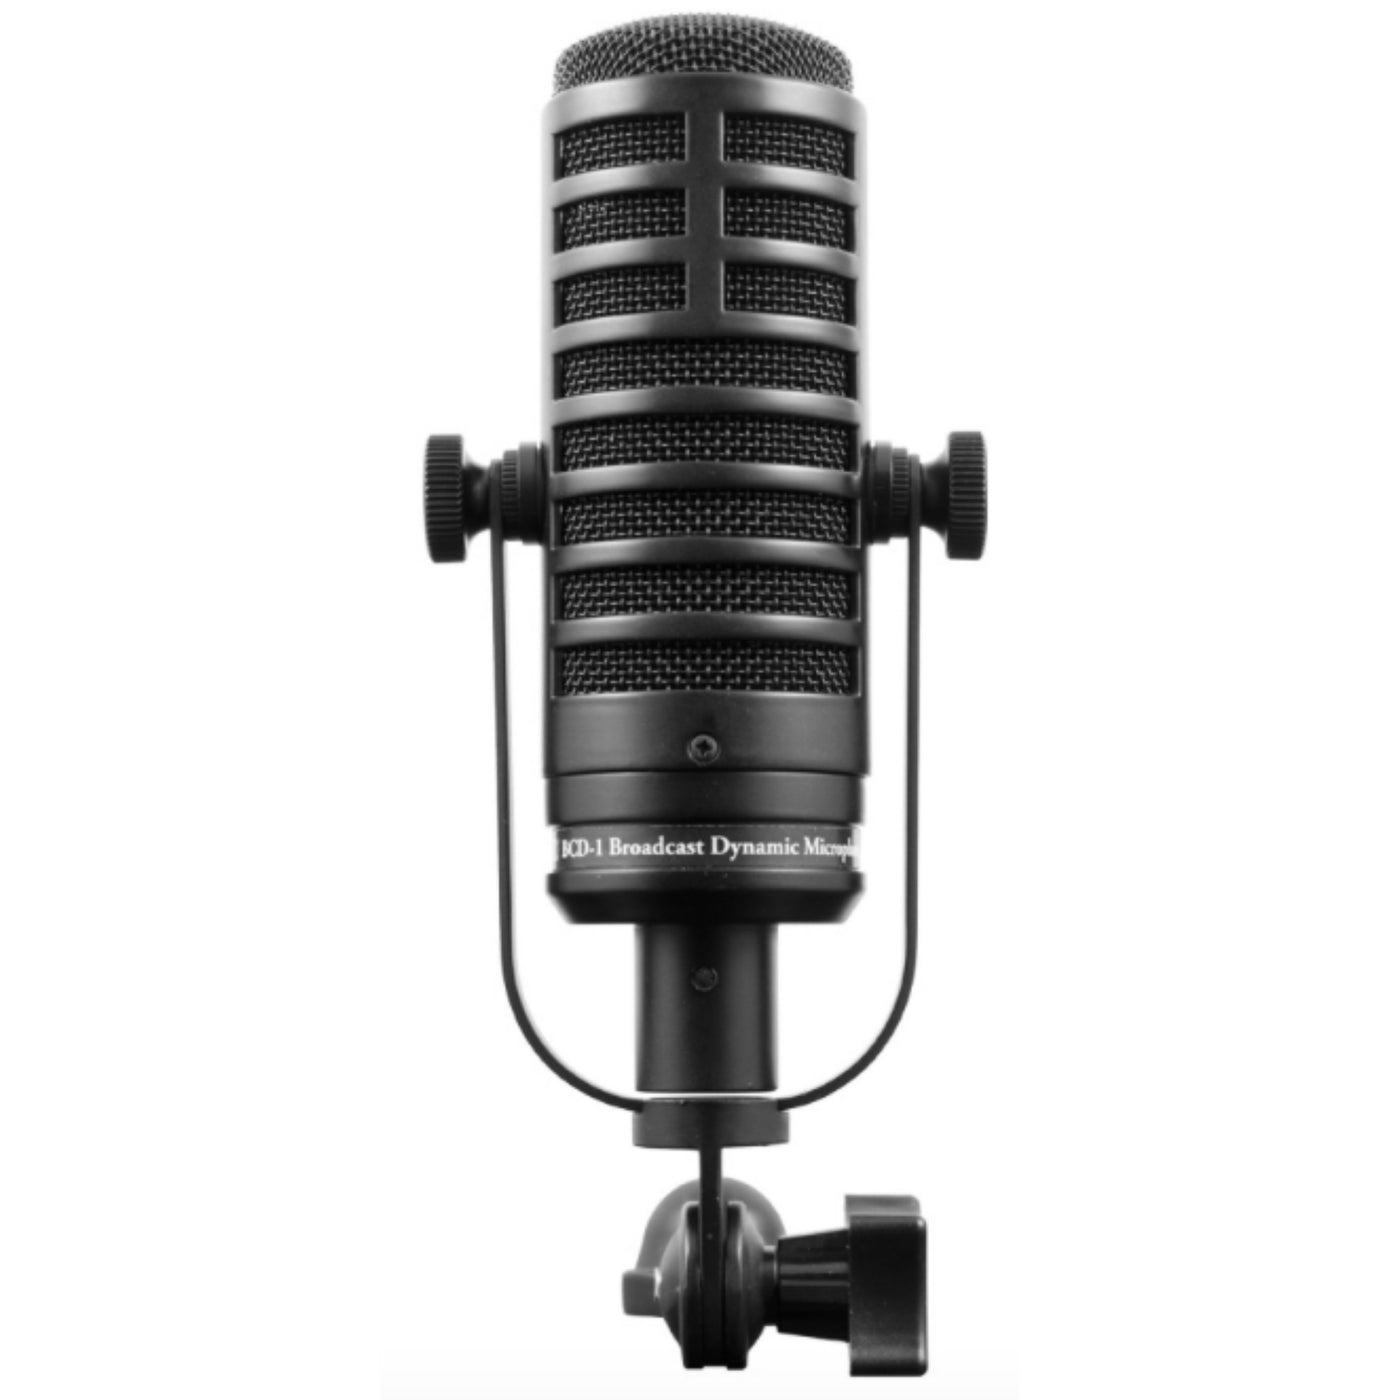 MXL-BCD-1 Podcast Dynamic Microphone